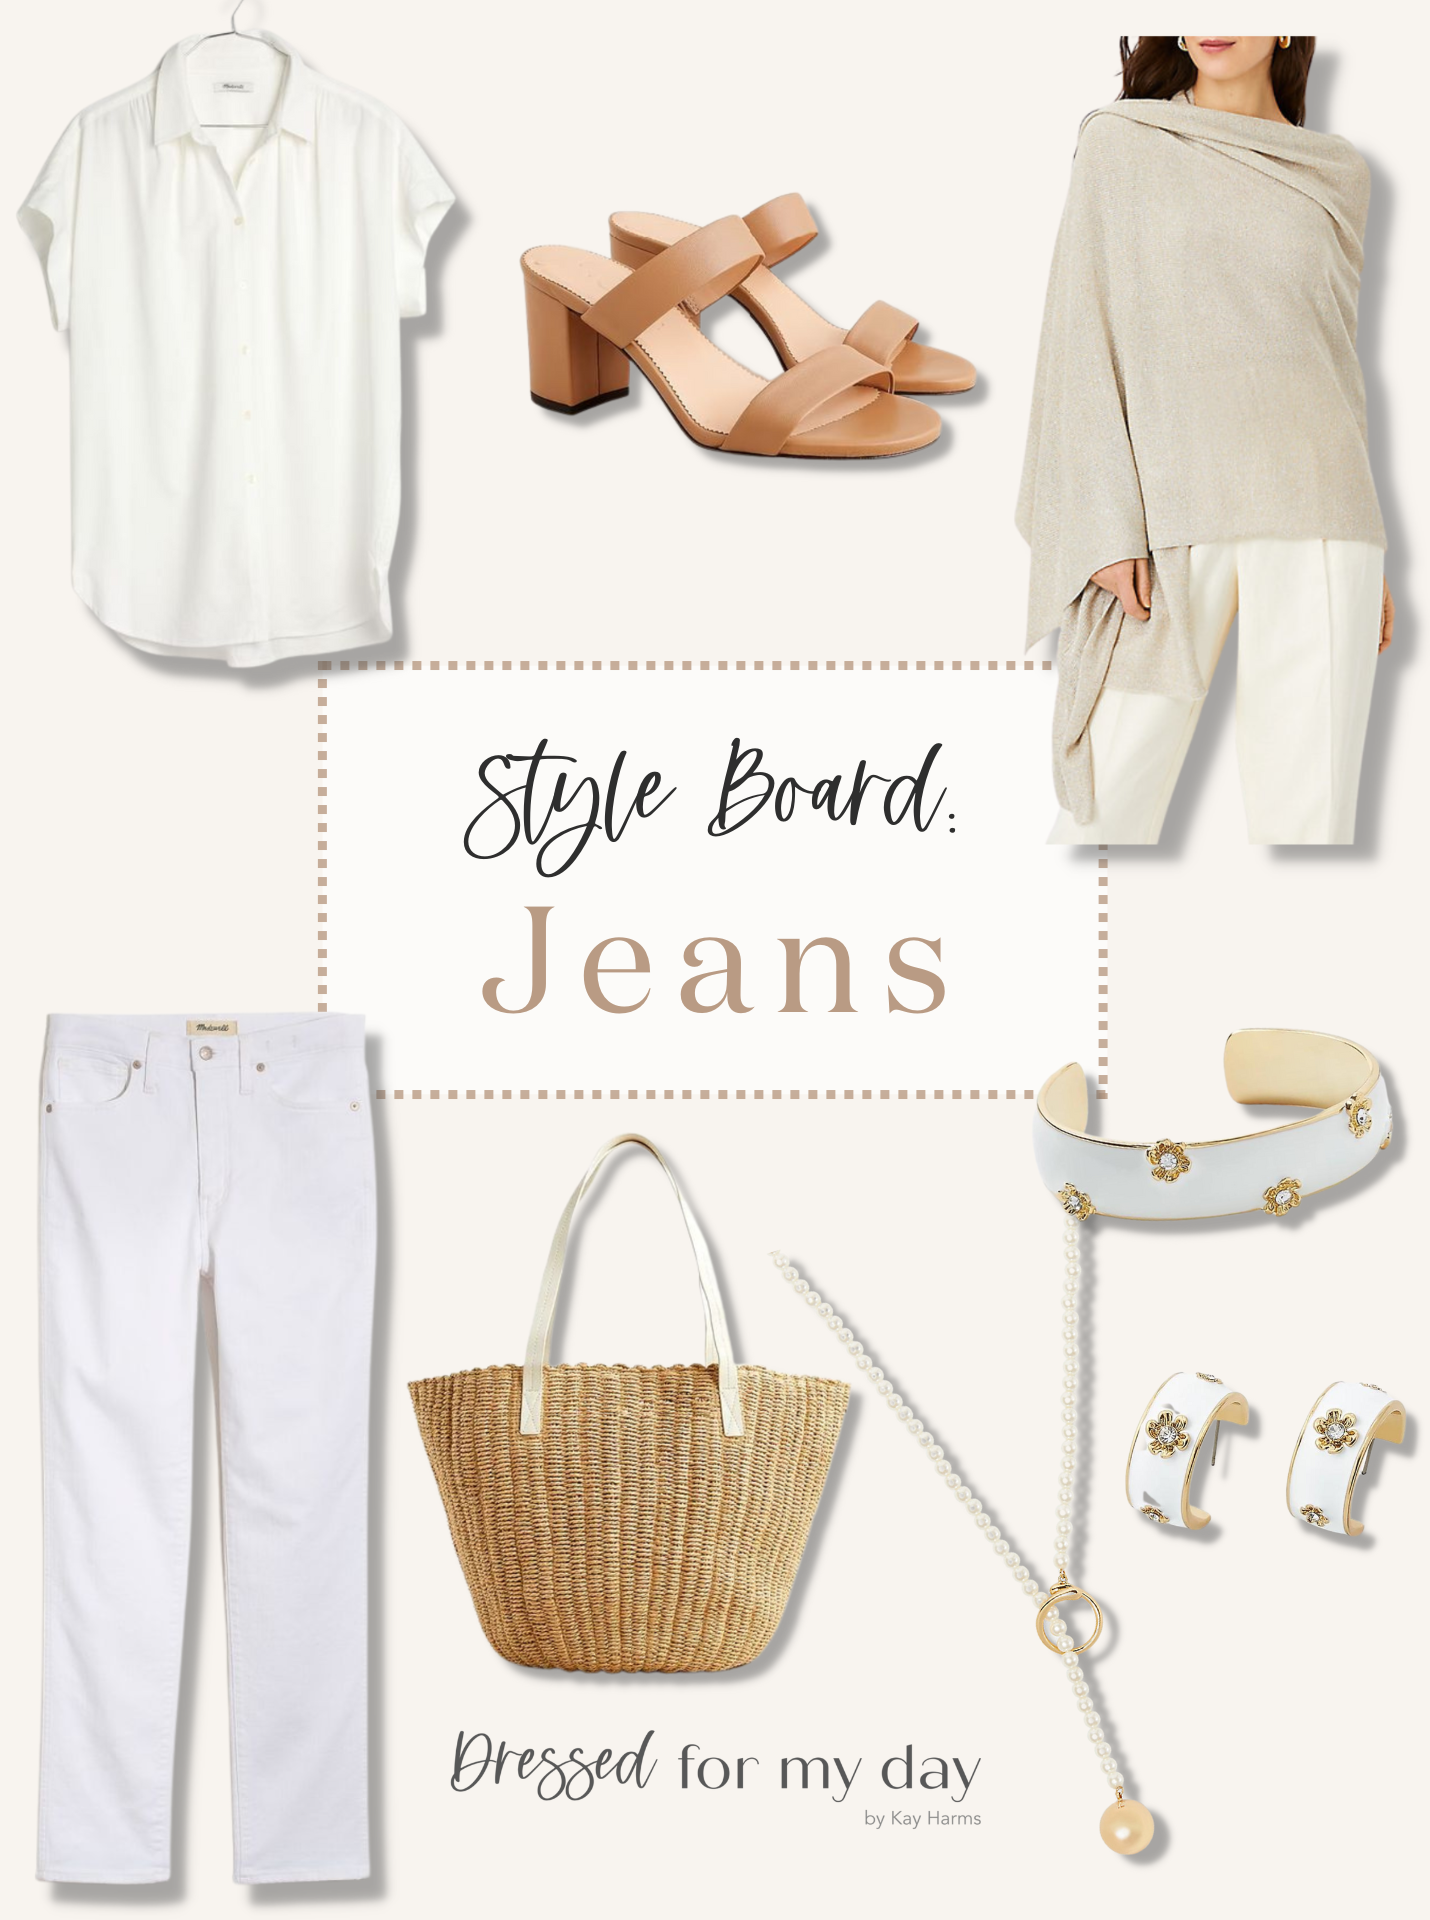 3. White Jeans